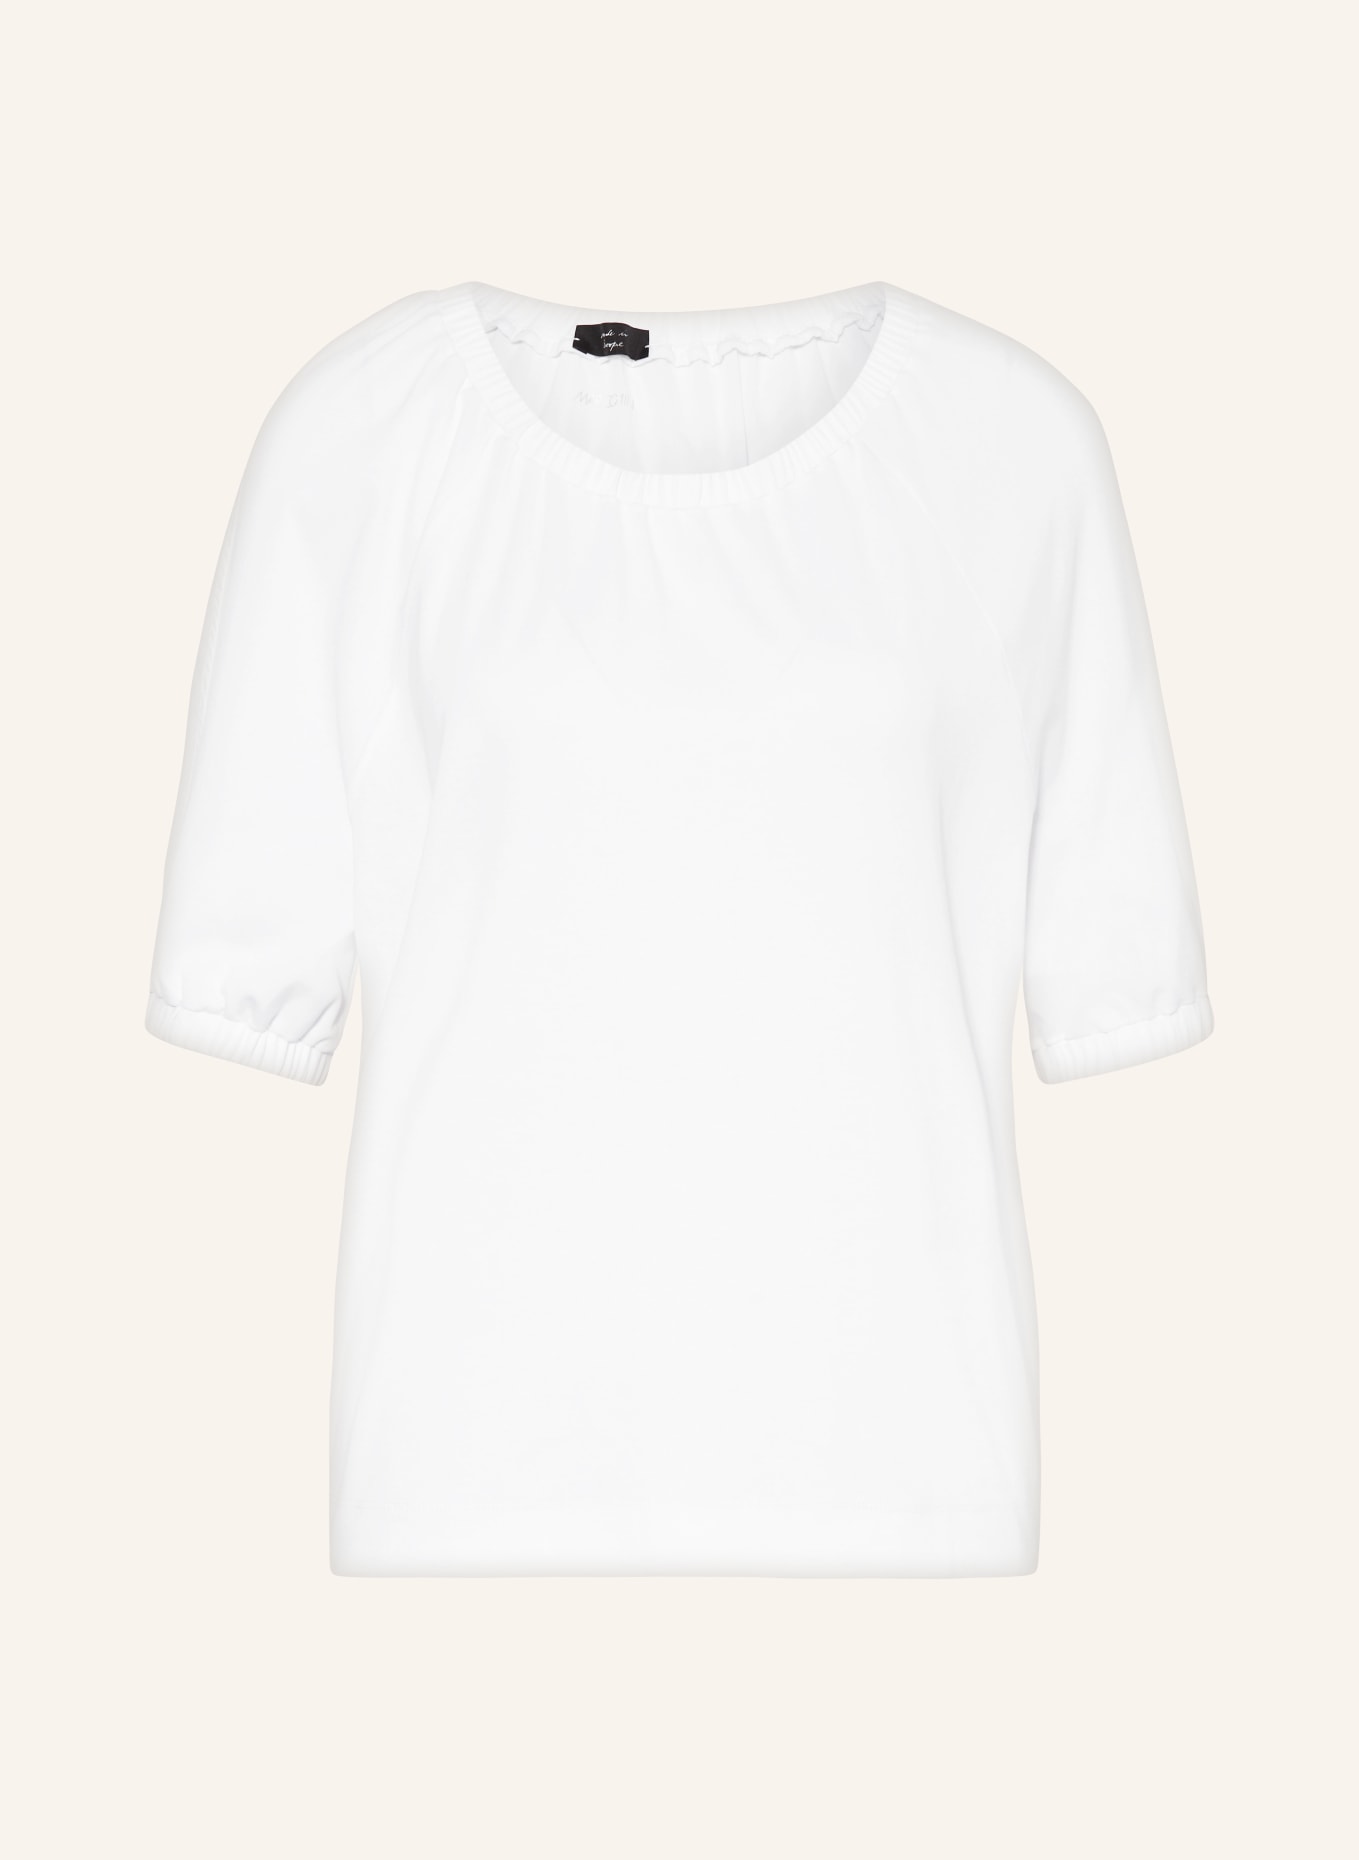 MARC CAIN T-Shirt im Materialmix, Farbe: 100 WHITE (Bild 1)